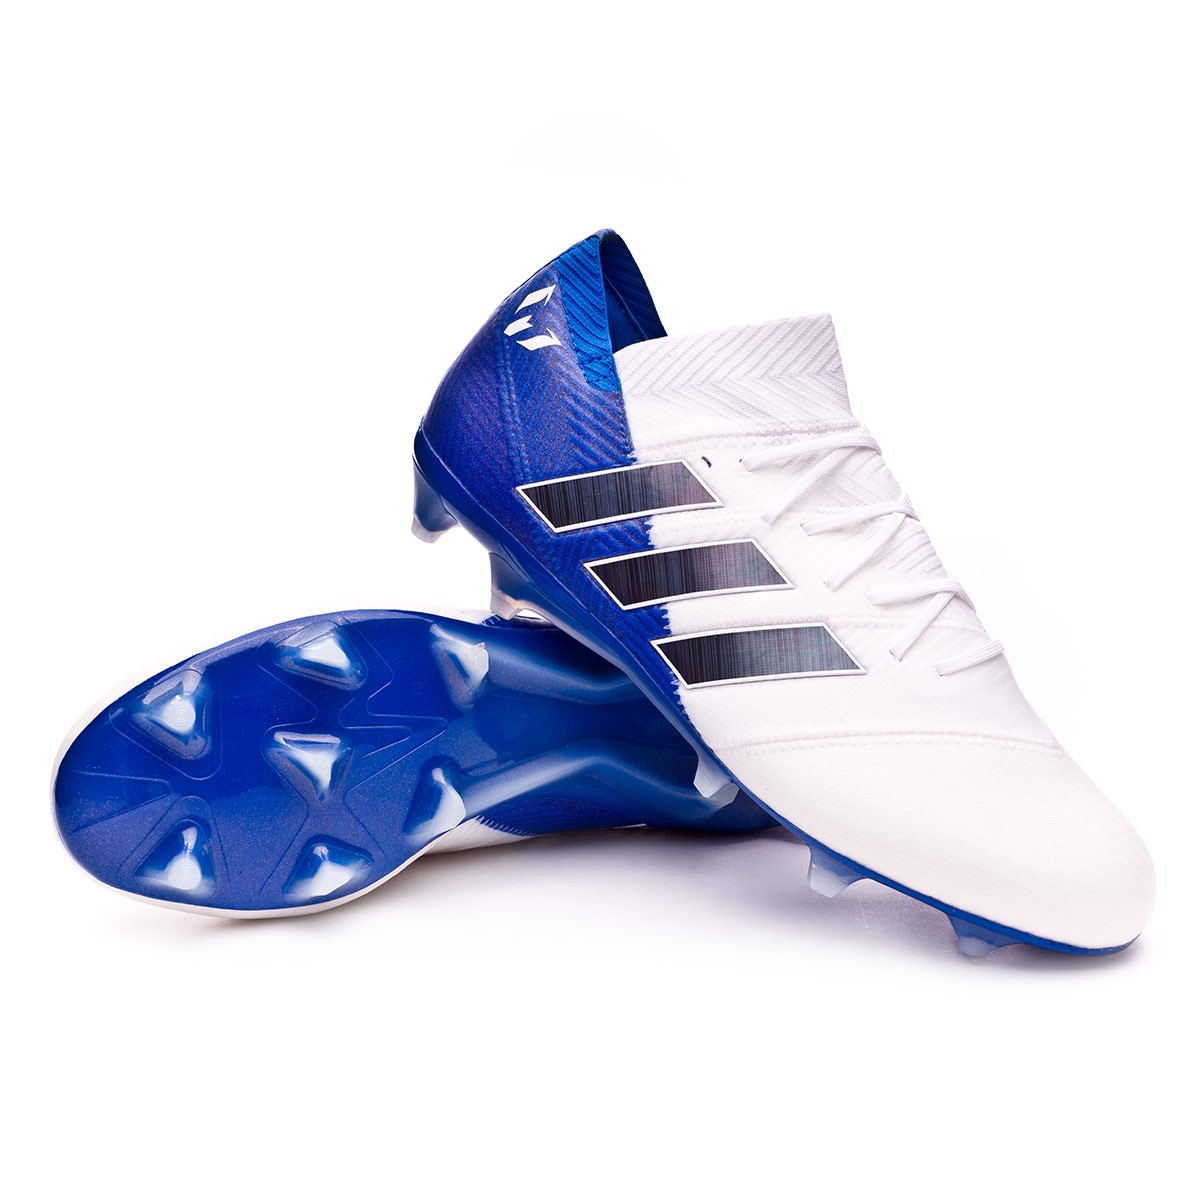 Football Boots adidas Nemeziz Messi 18.1 FG White-Core black-Football blue  - Football store Fútbol Emotion